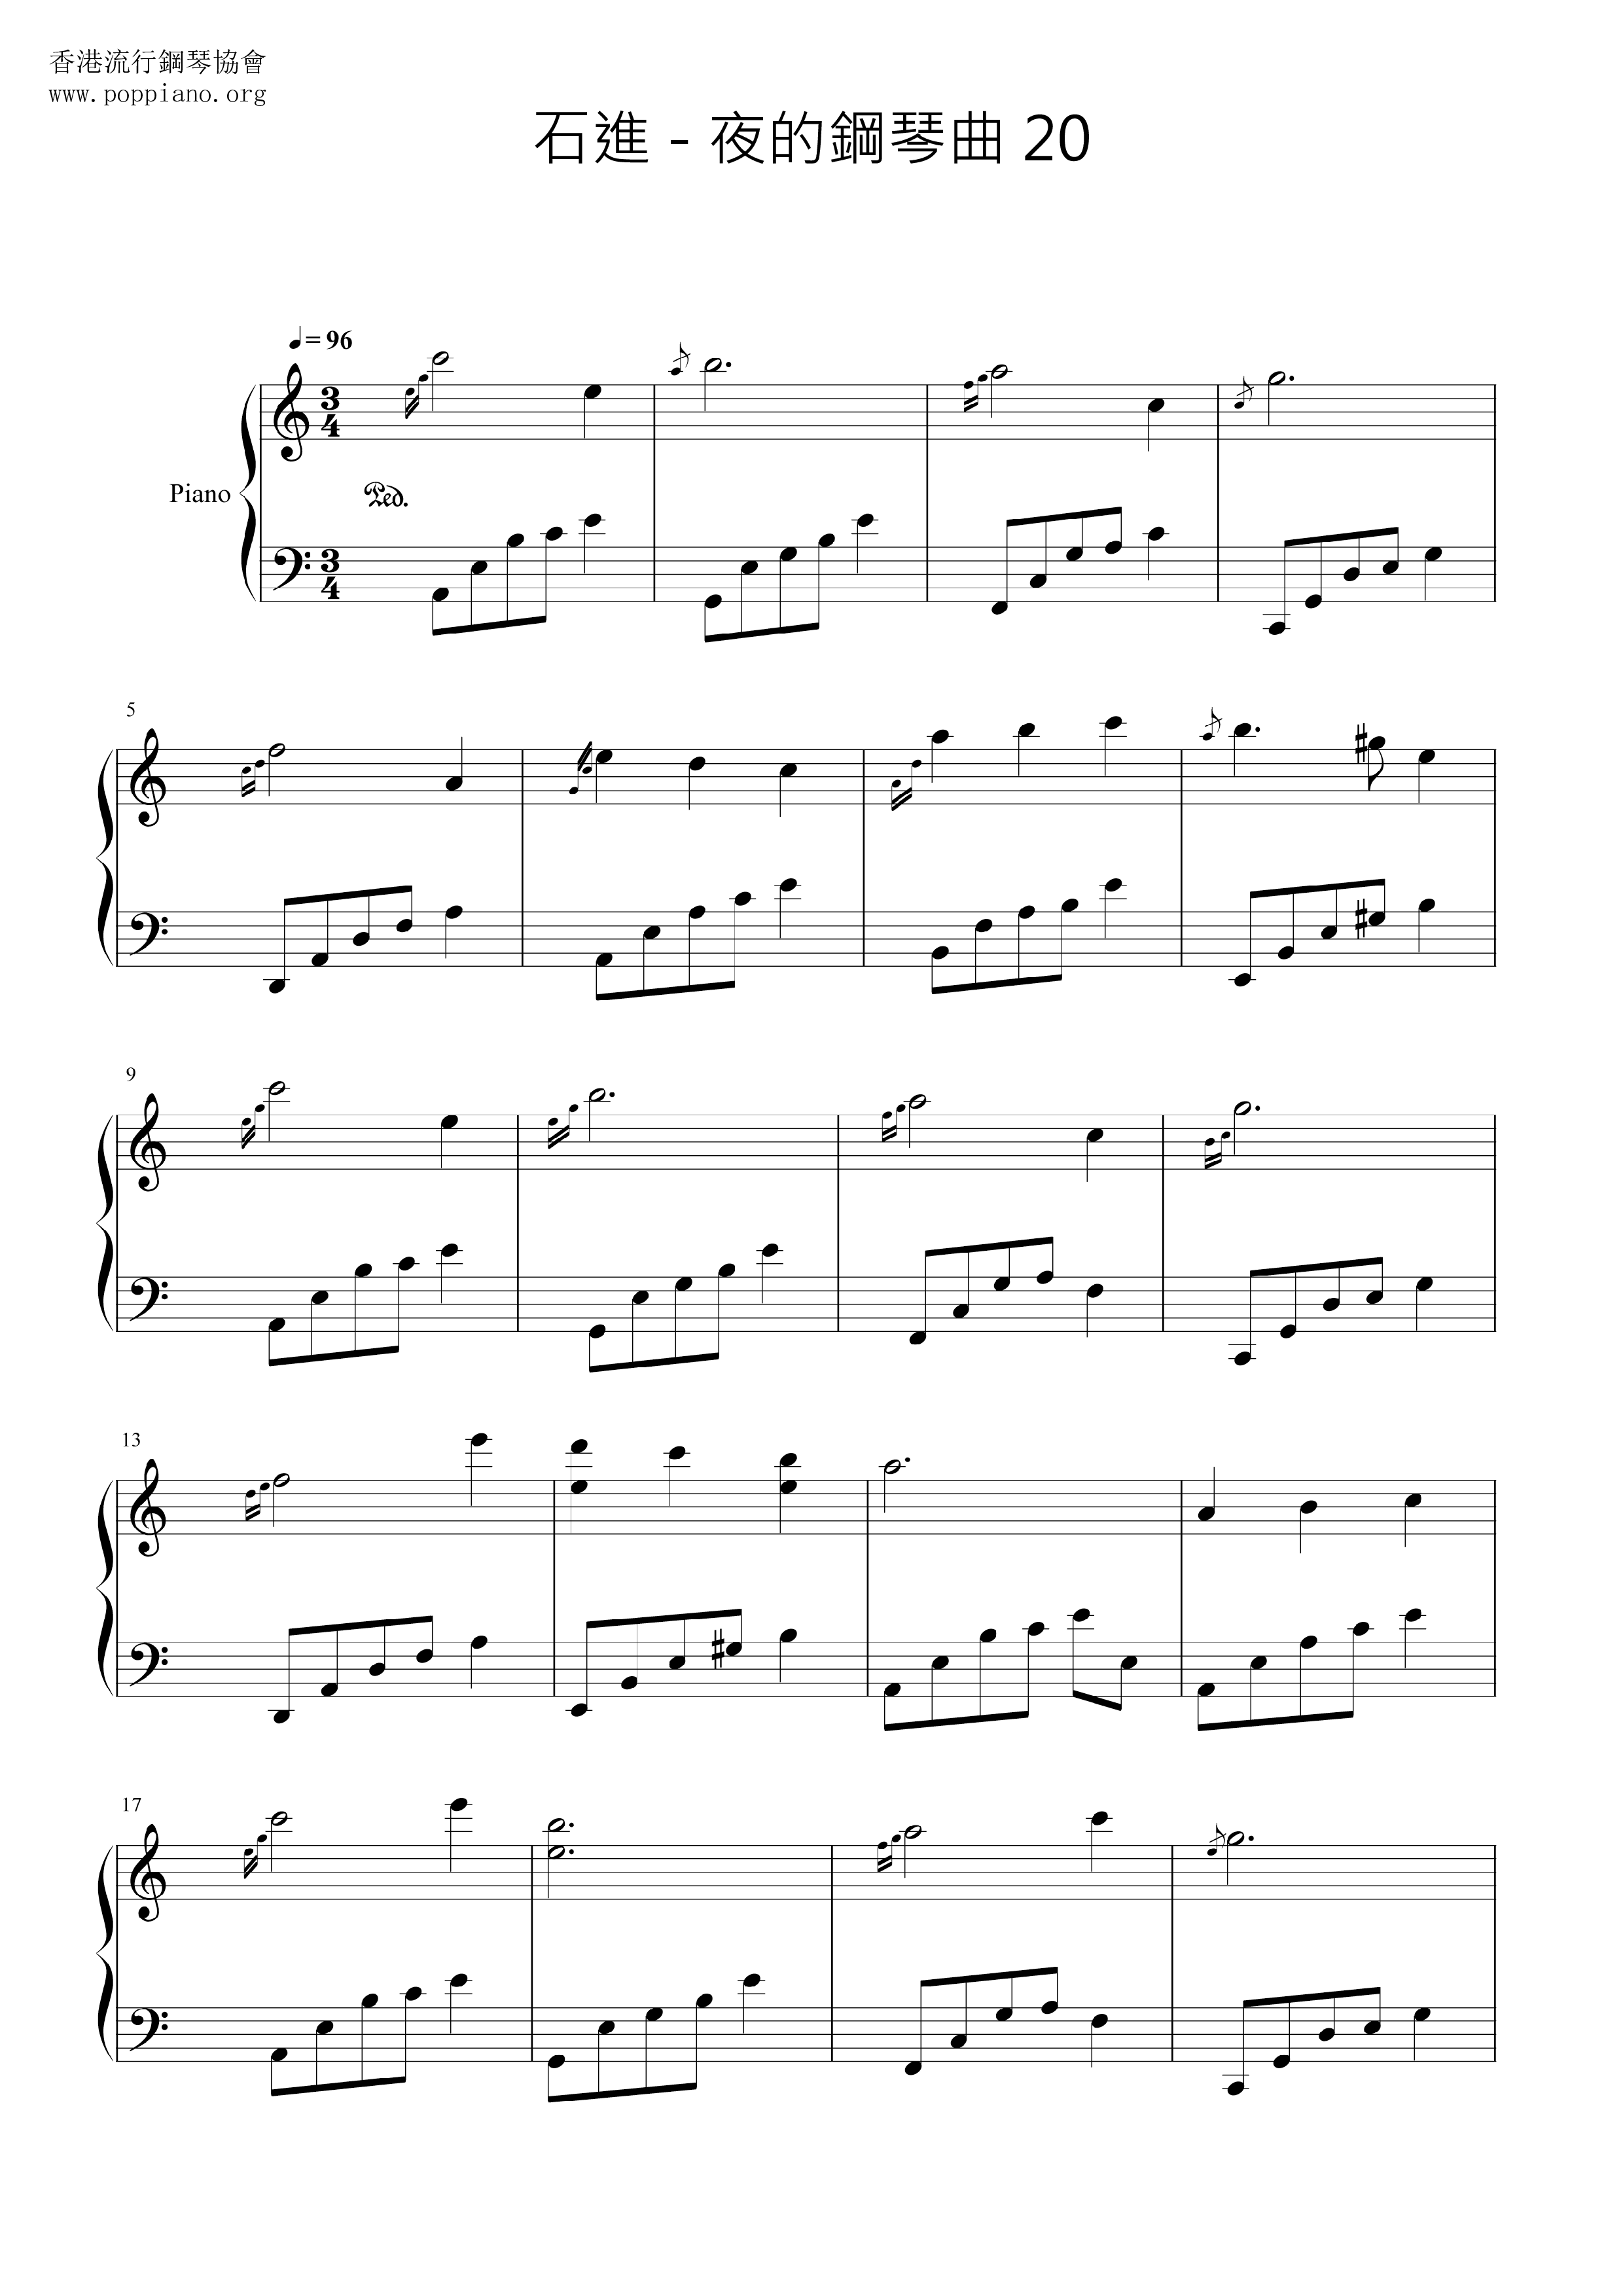 Melody Of The Night 20 Score